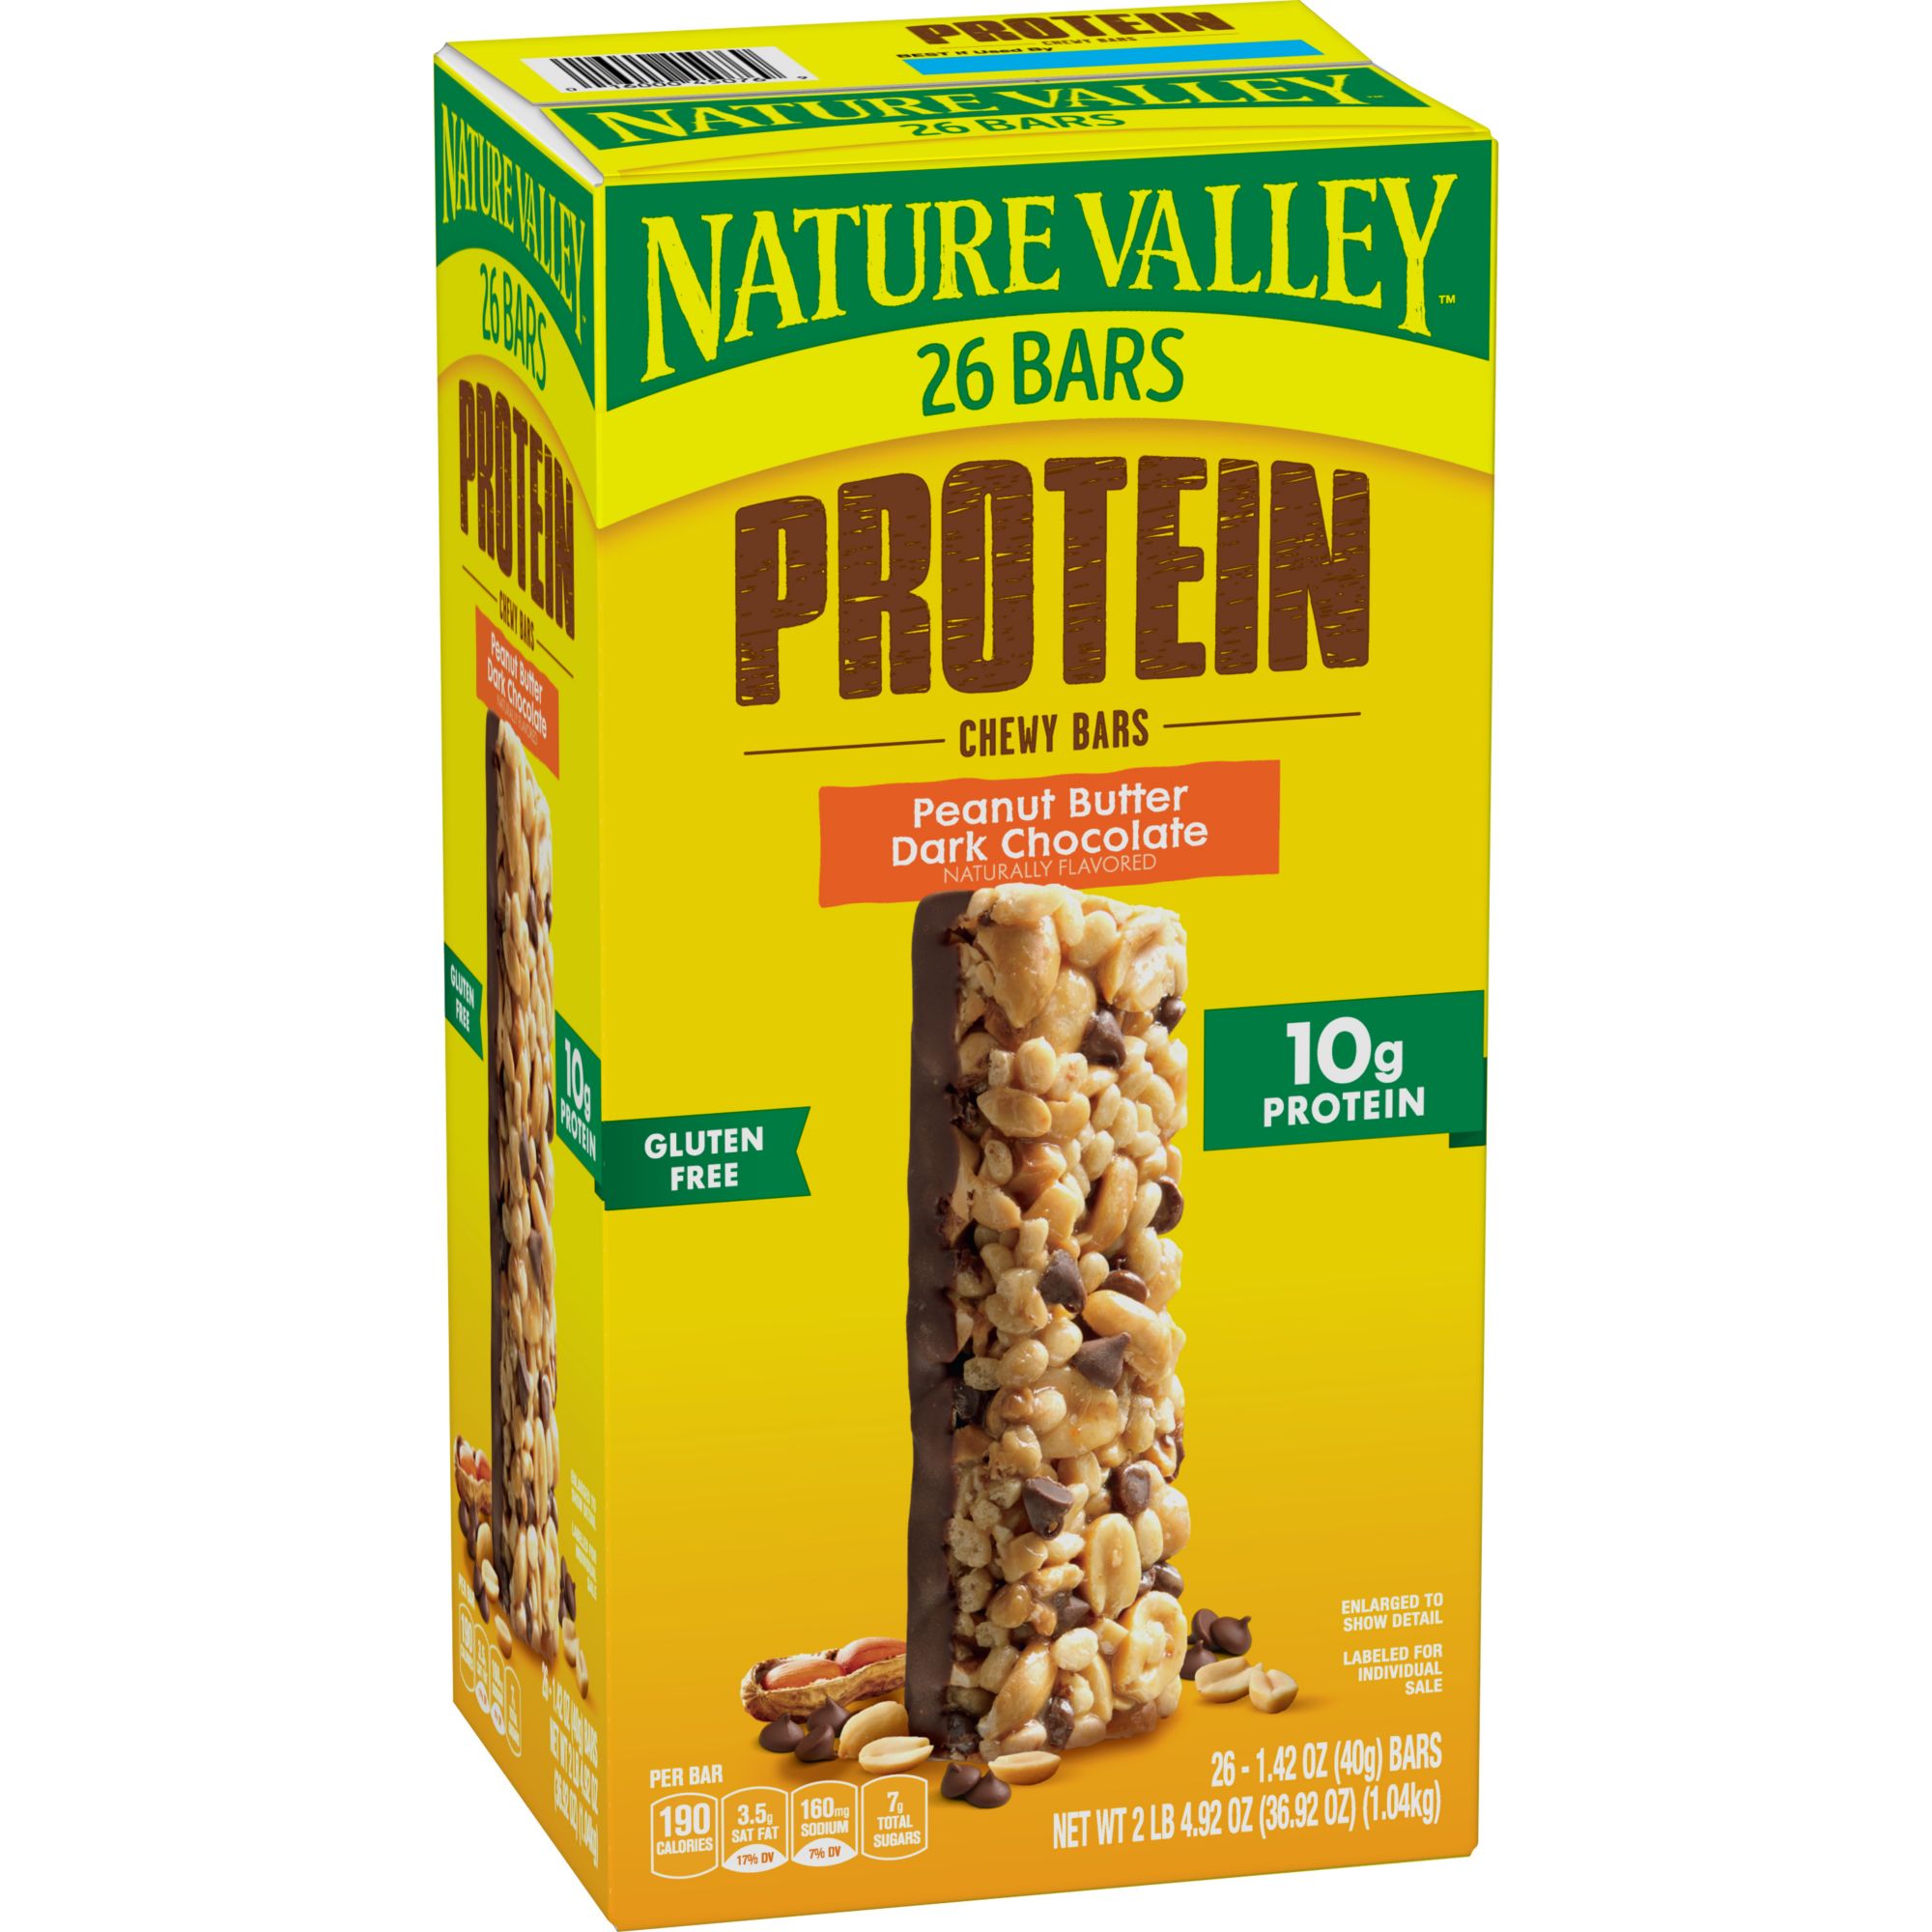 Nature Valley Crunchy Granola Bars, Peanut Butter, 15 ct, 30 bars